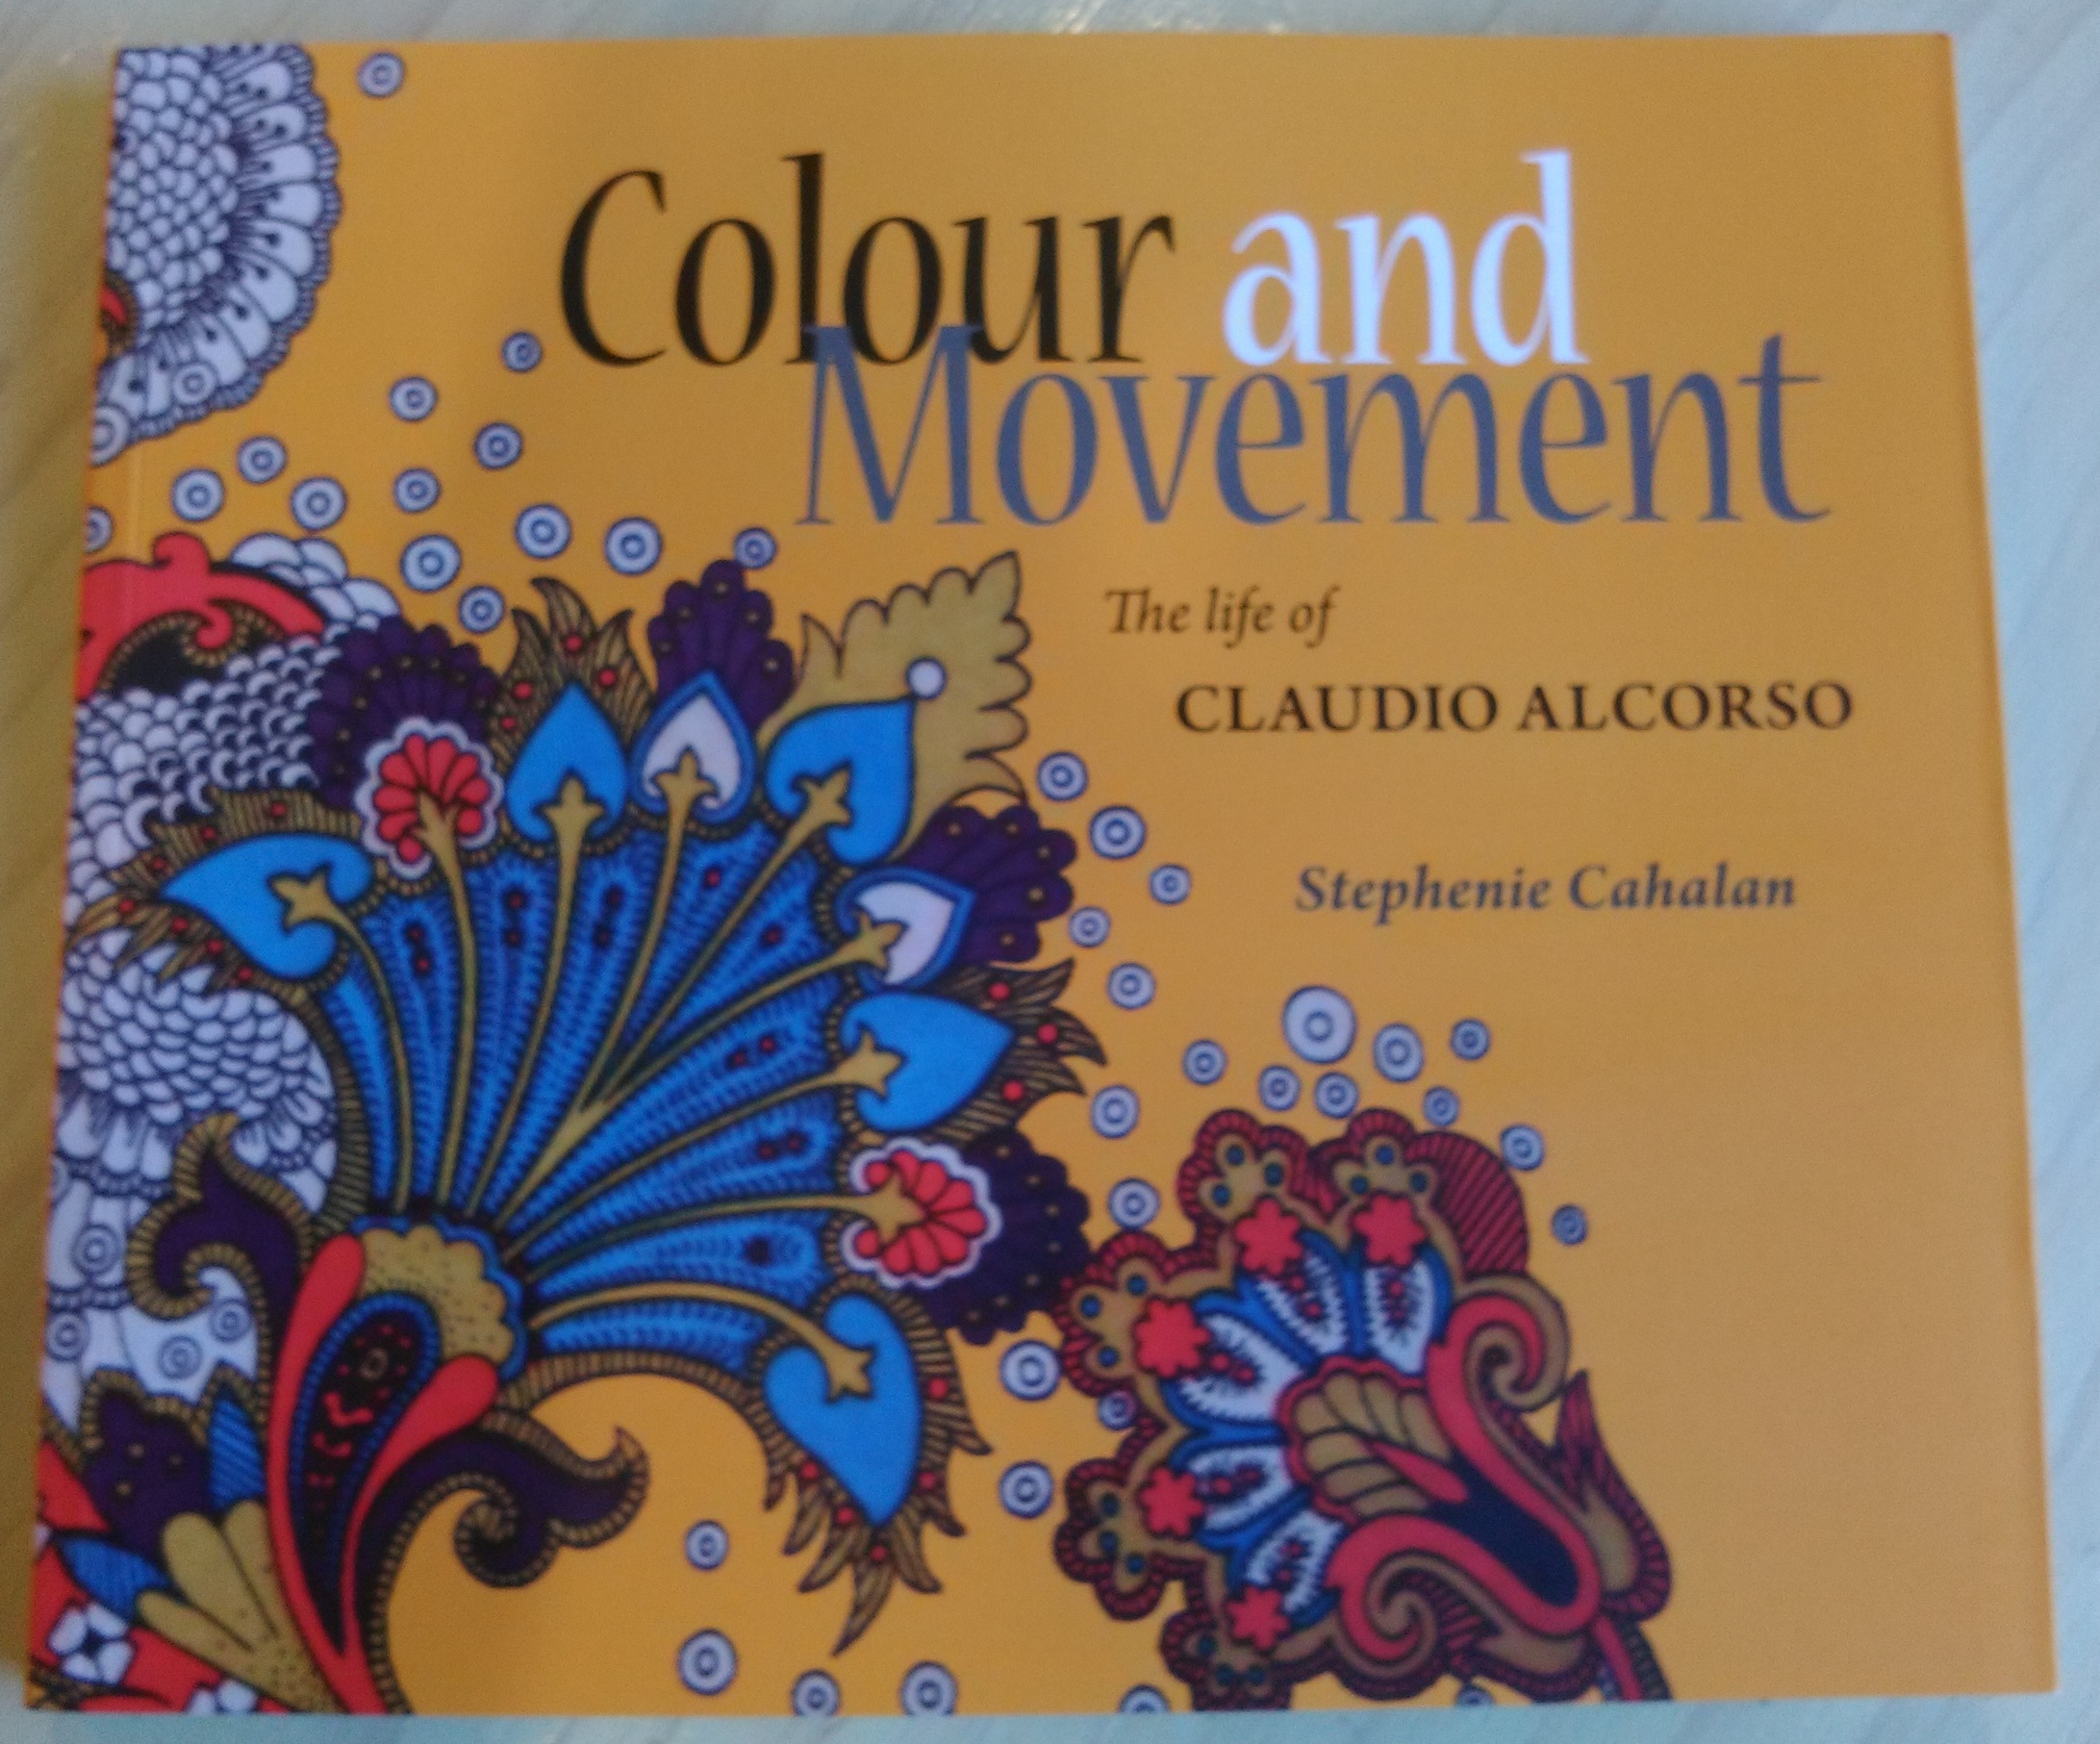 Colour and Movement - the life of Claudio Alcorso